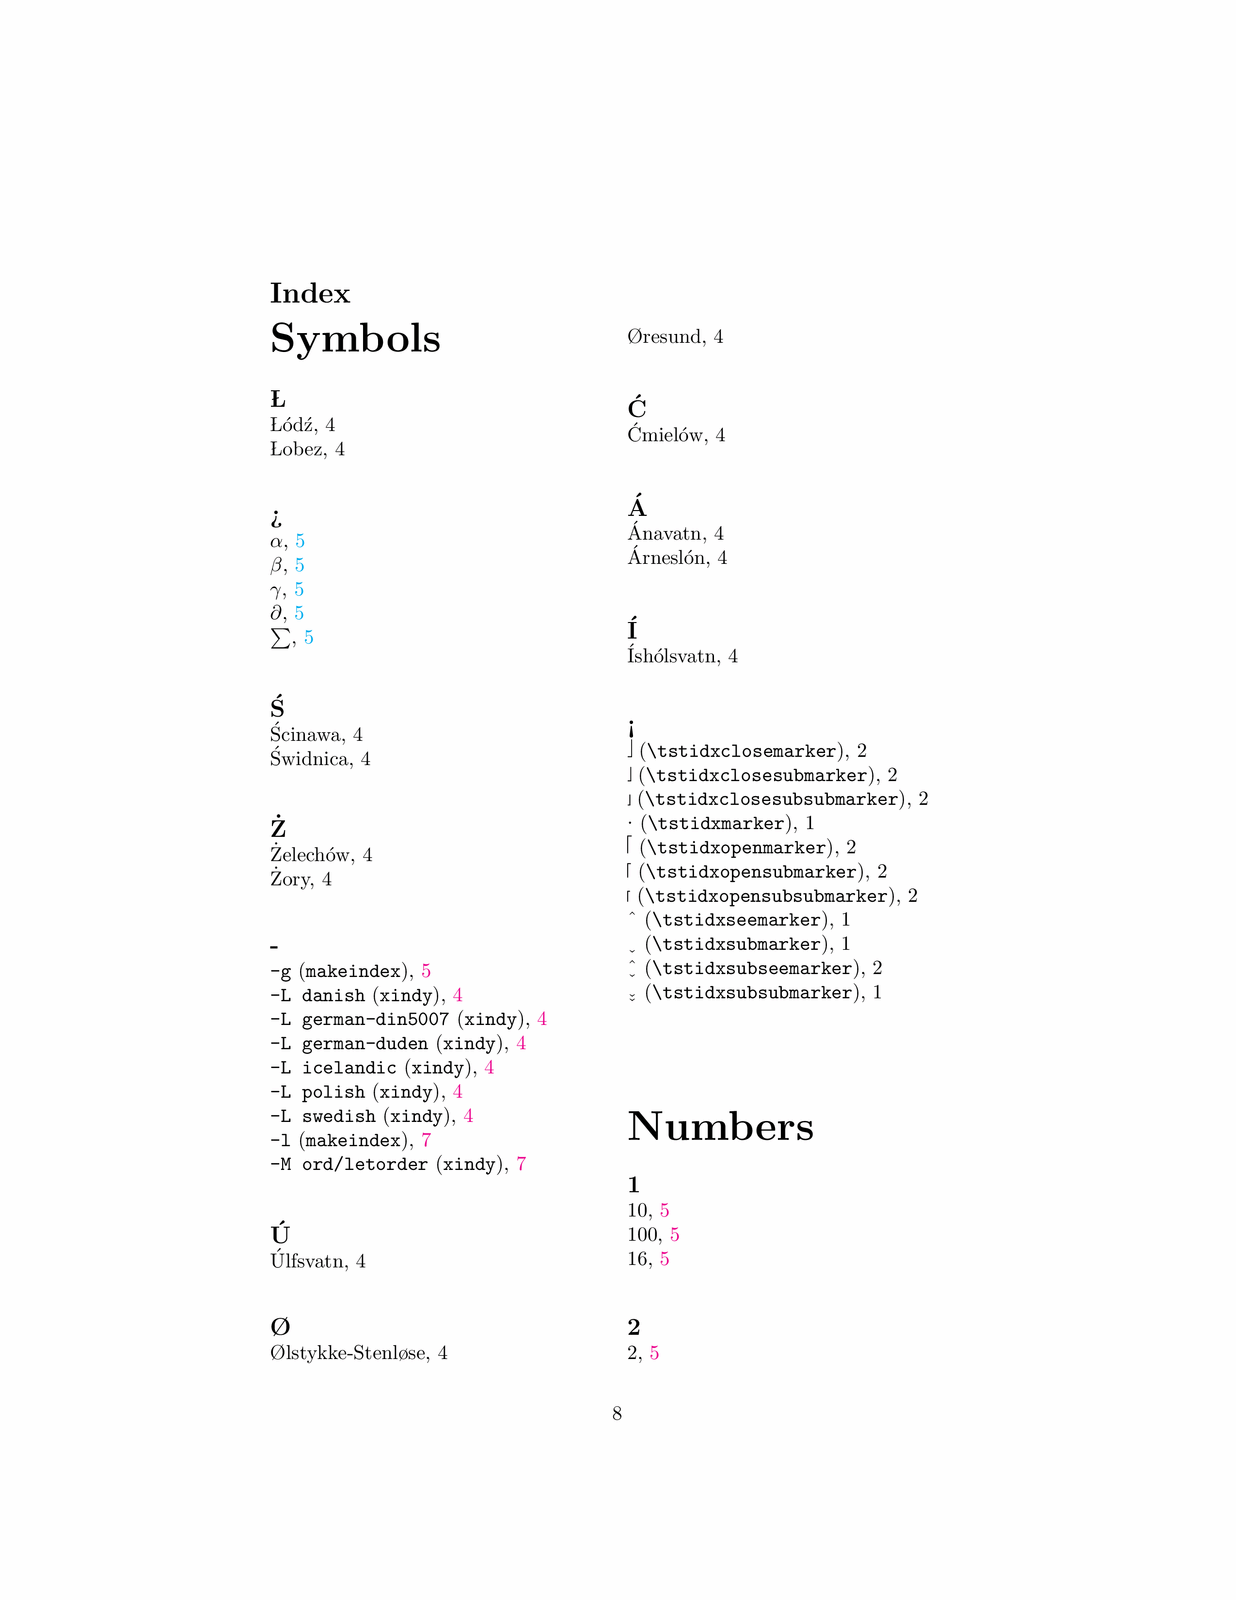 Haskell
,
 
HsIndex
,
 
LaTeX
